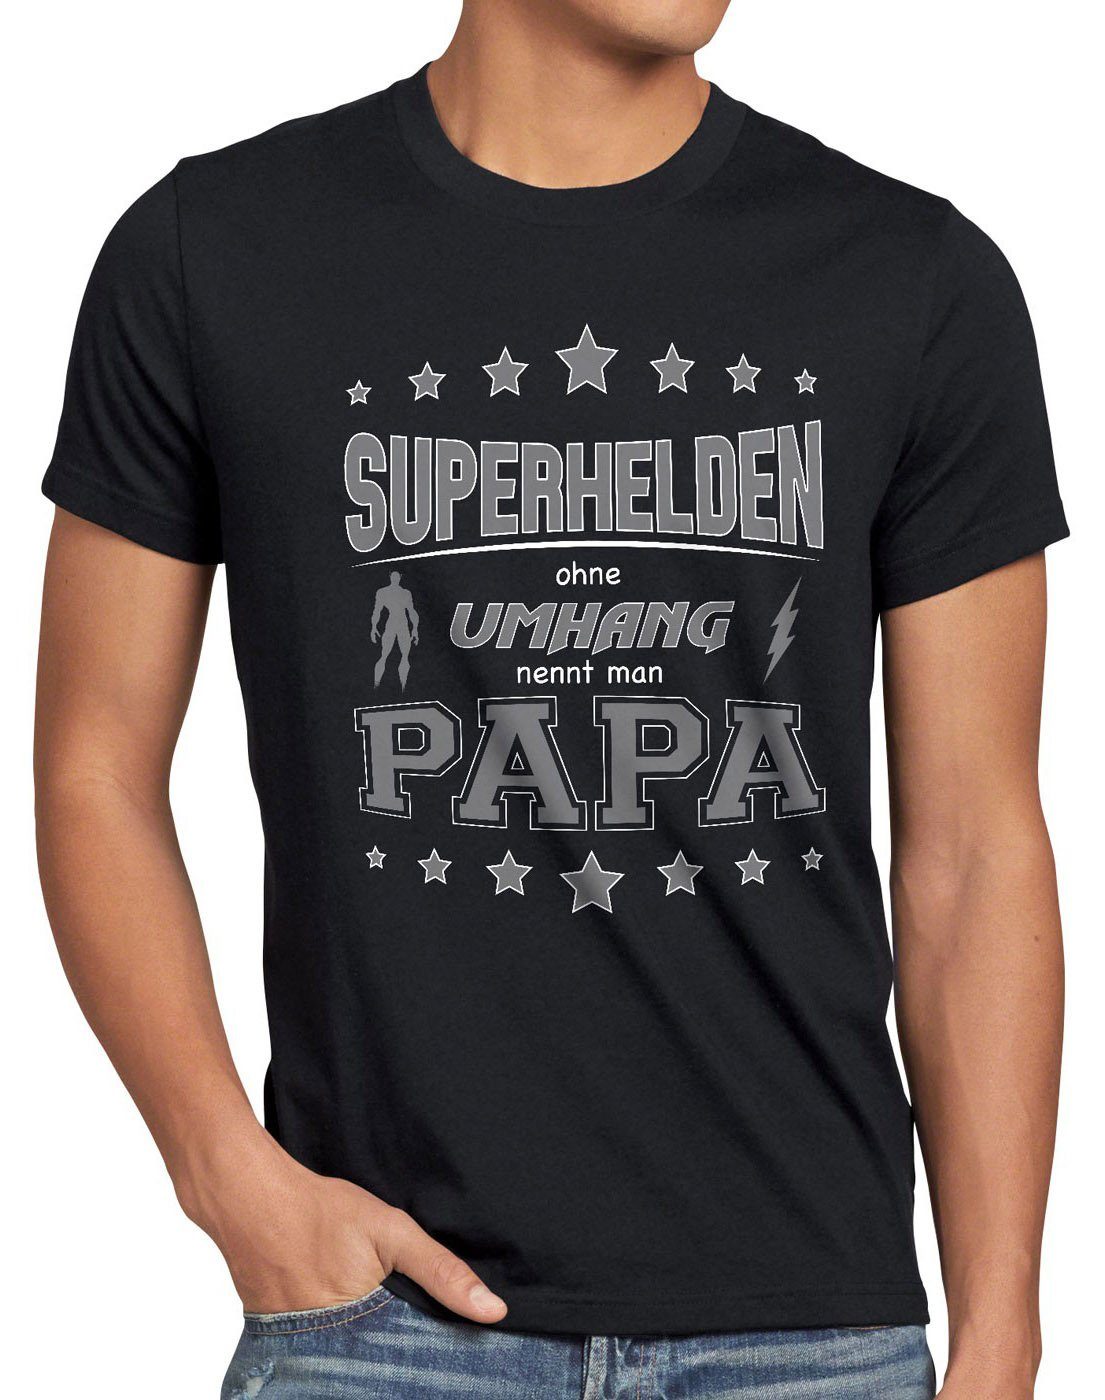 nennt Umhang Shirt schwarz T-Shirt Vater man Herren Spruch style3 Dad ohne Papa Print-Shirt Fun Superhelden